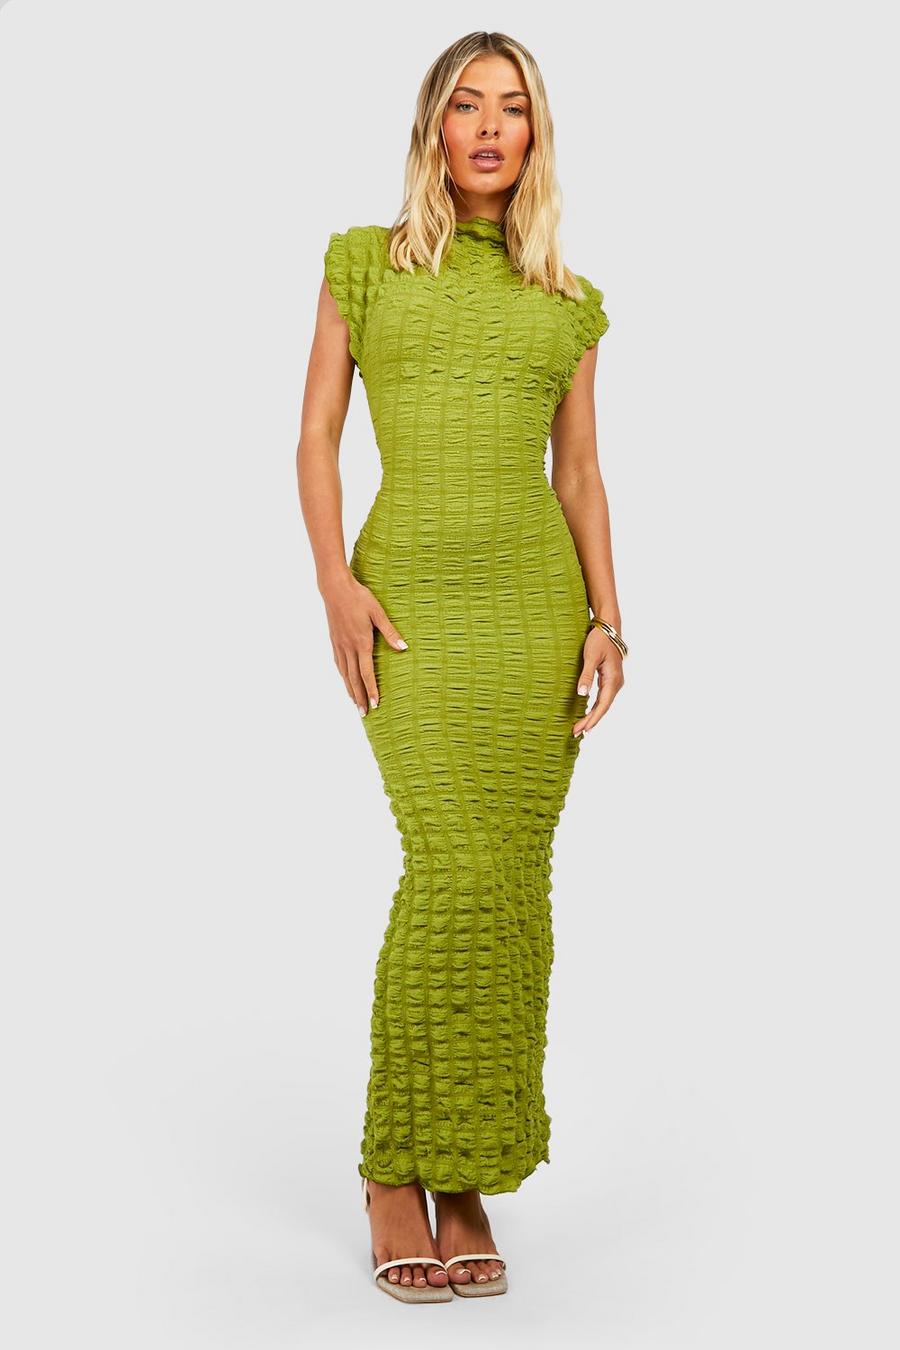 Olive green Bubble Textured Sleeveless Midi Dress